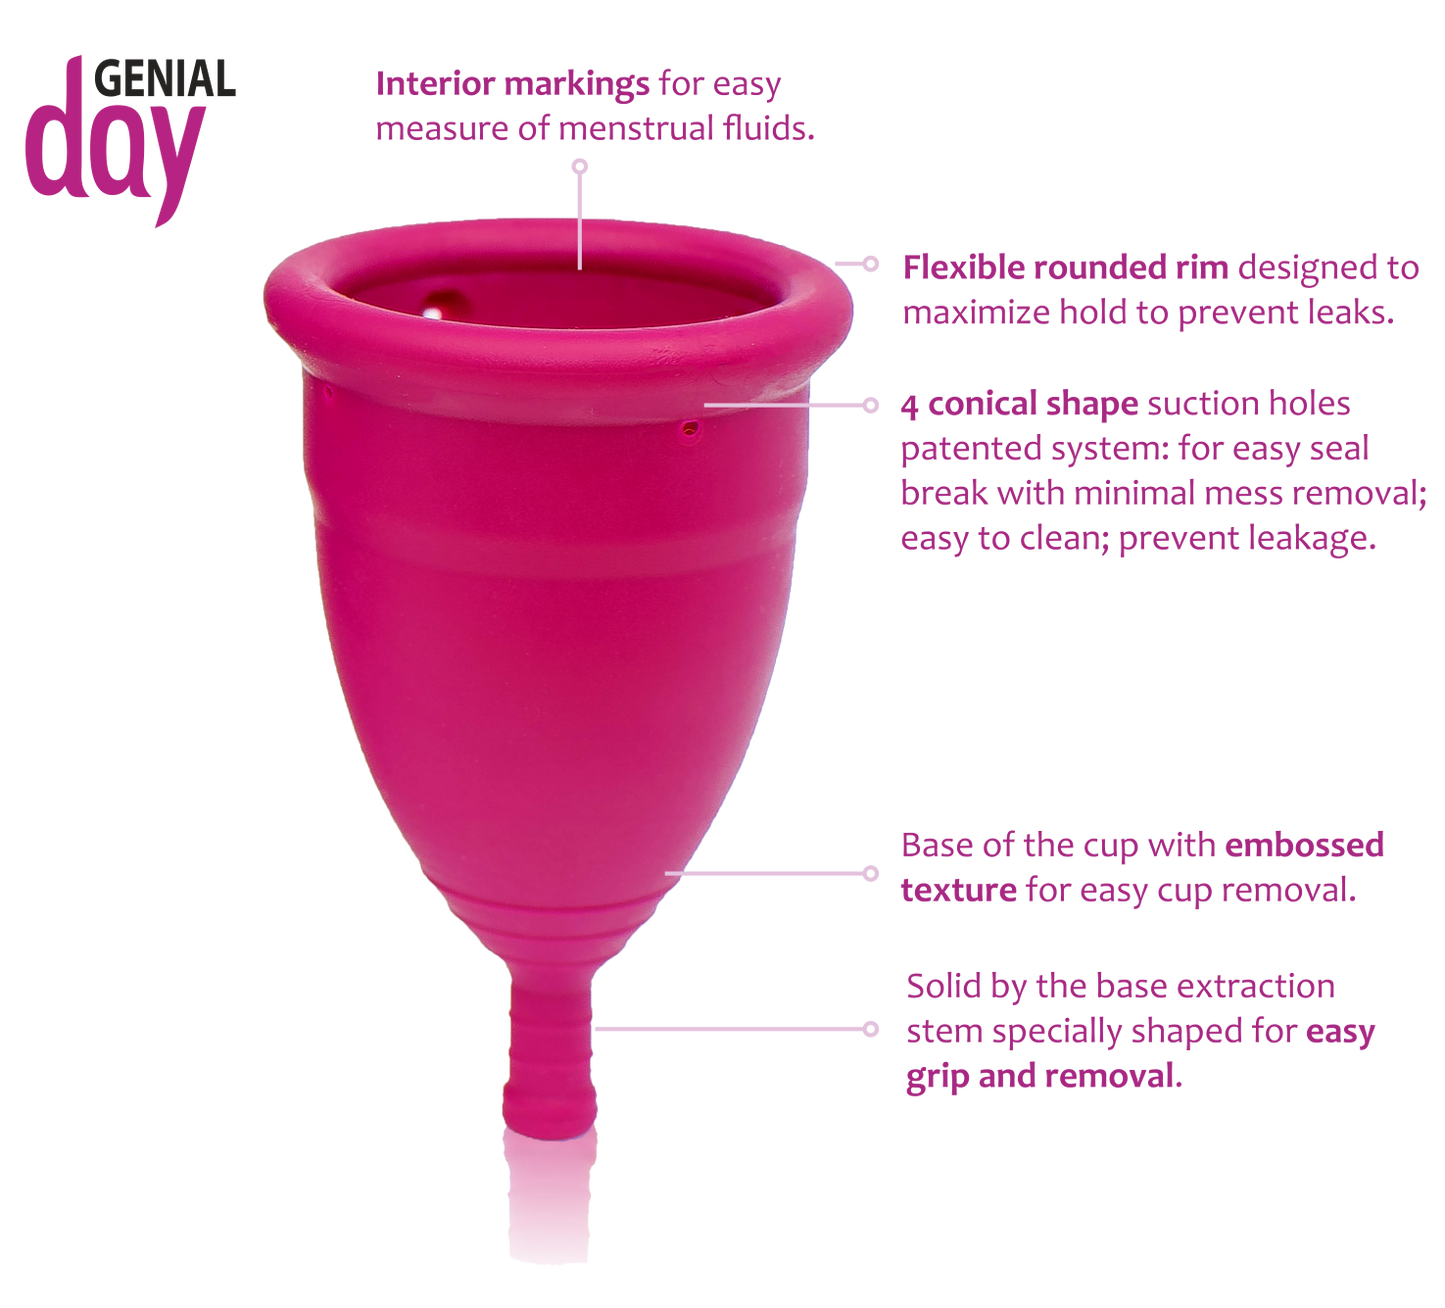 TPE Menstrual Cup